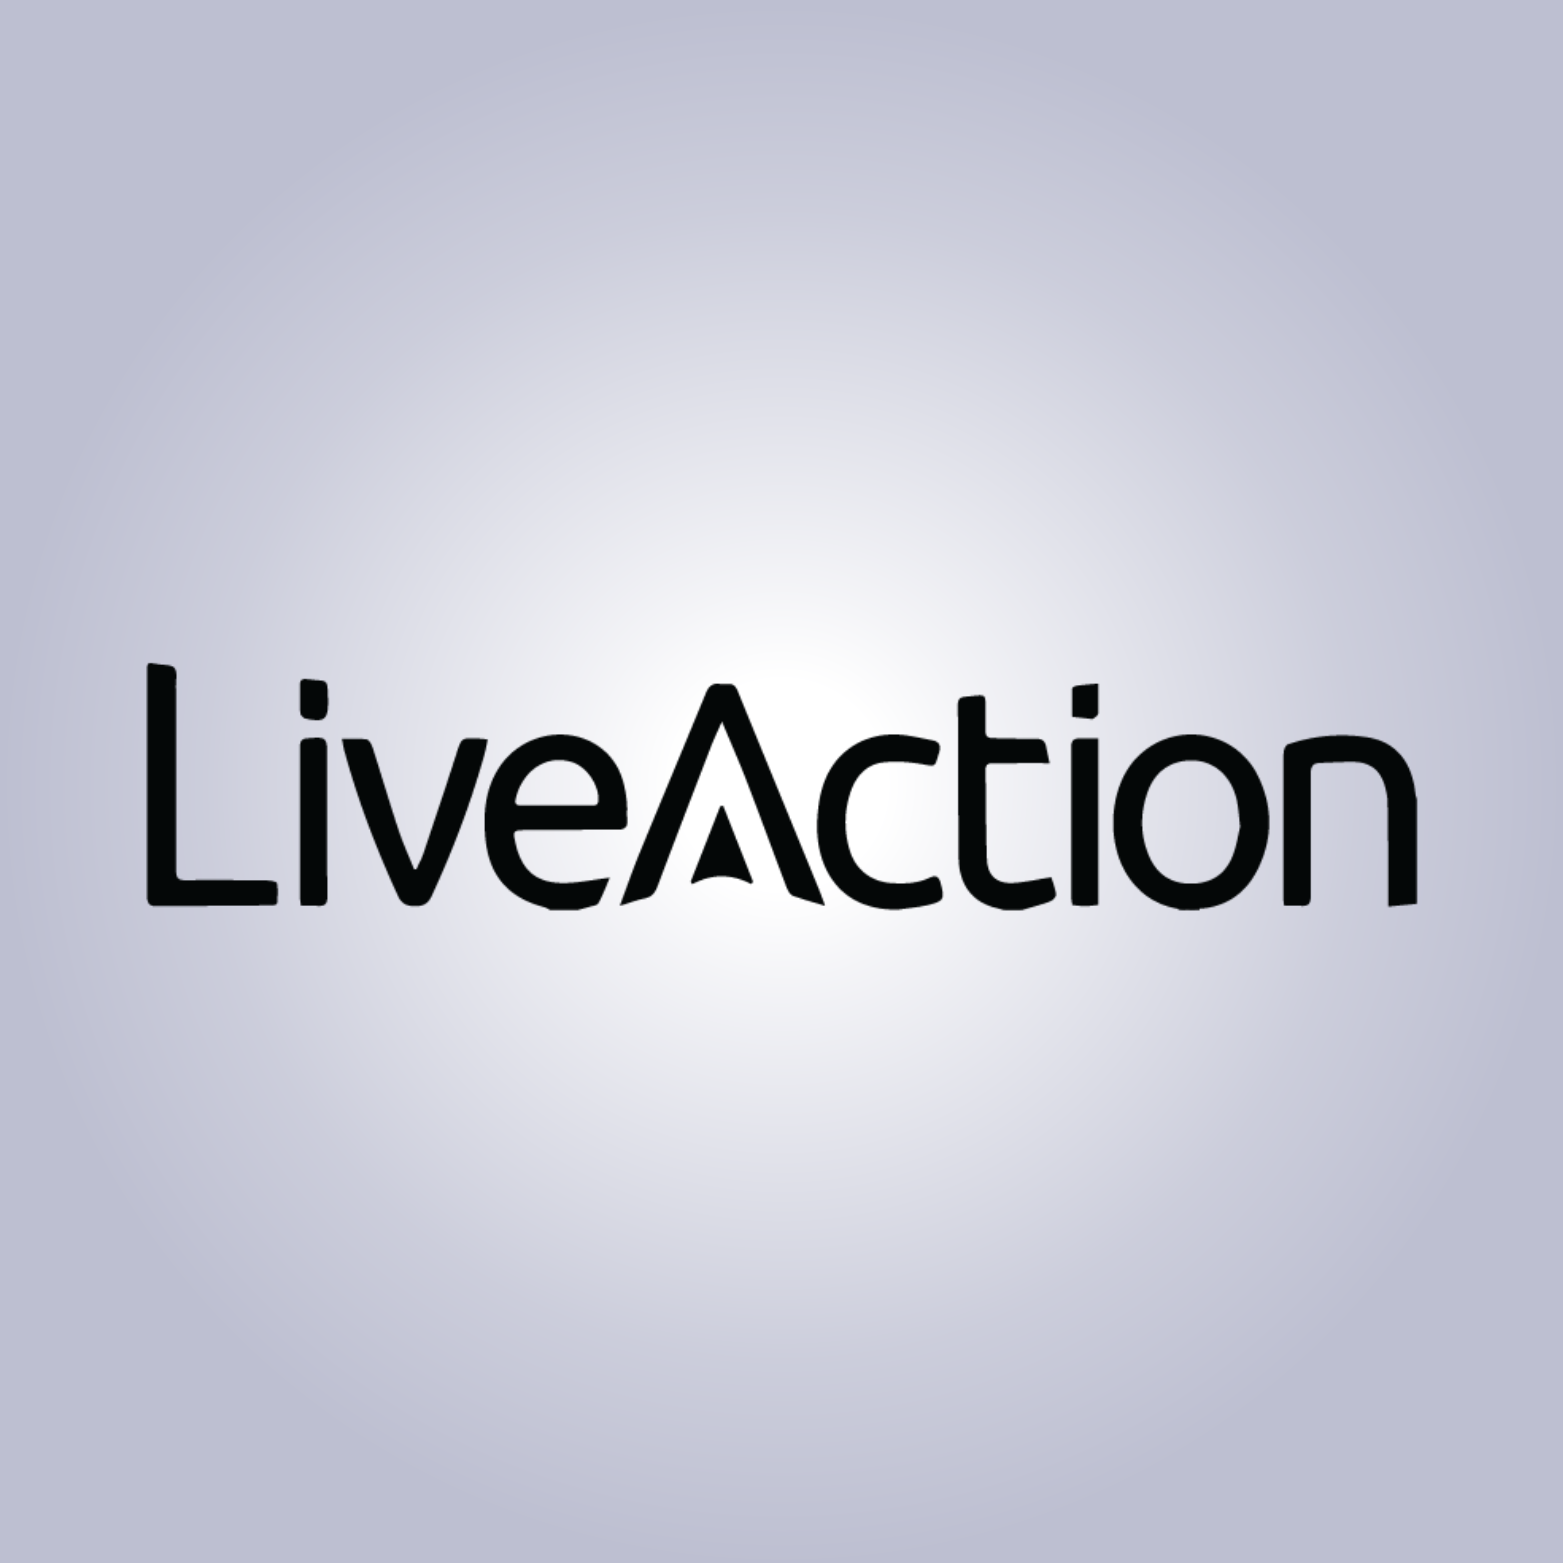 LiveAction logo.